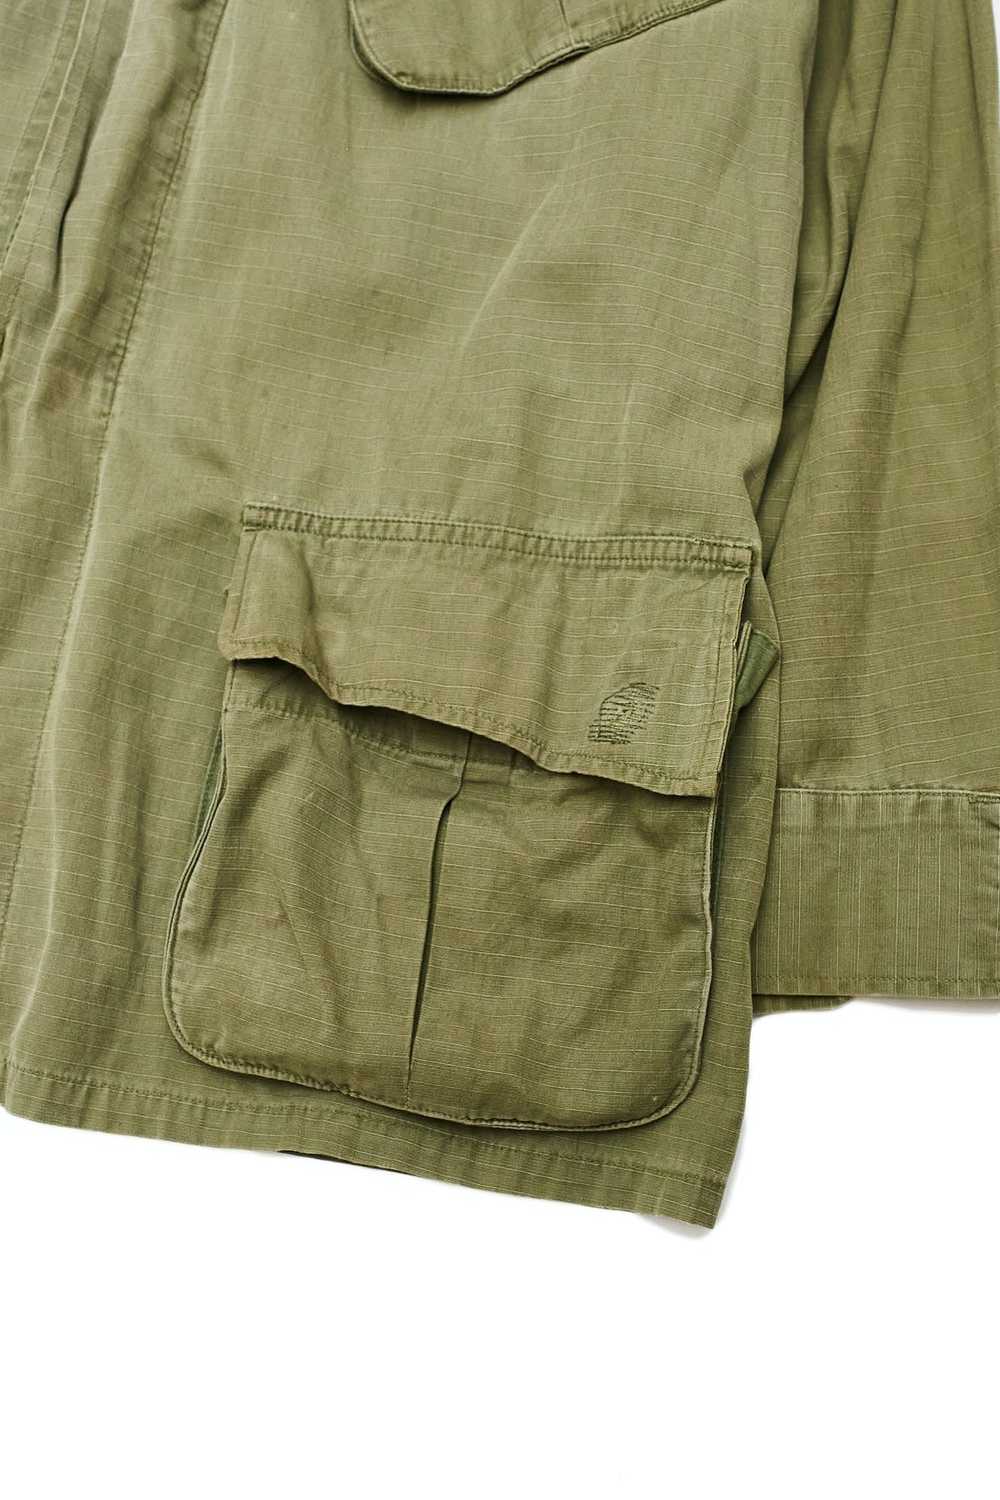 Military 70's Jungle Jacket - image 3